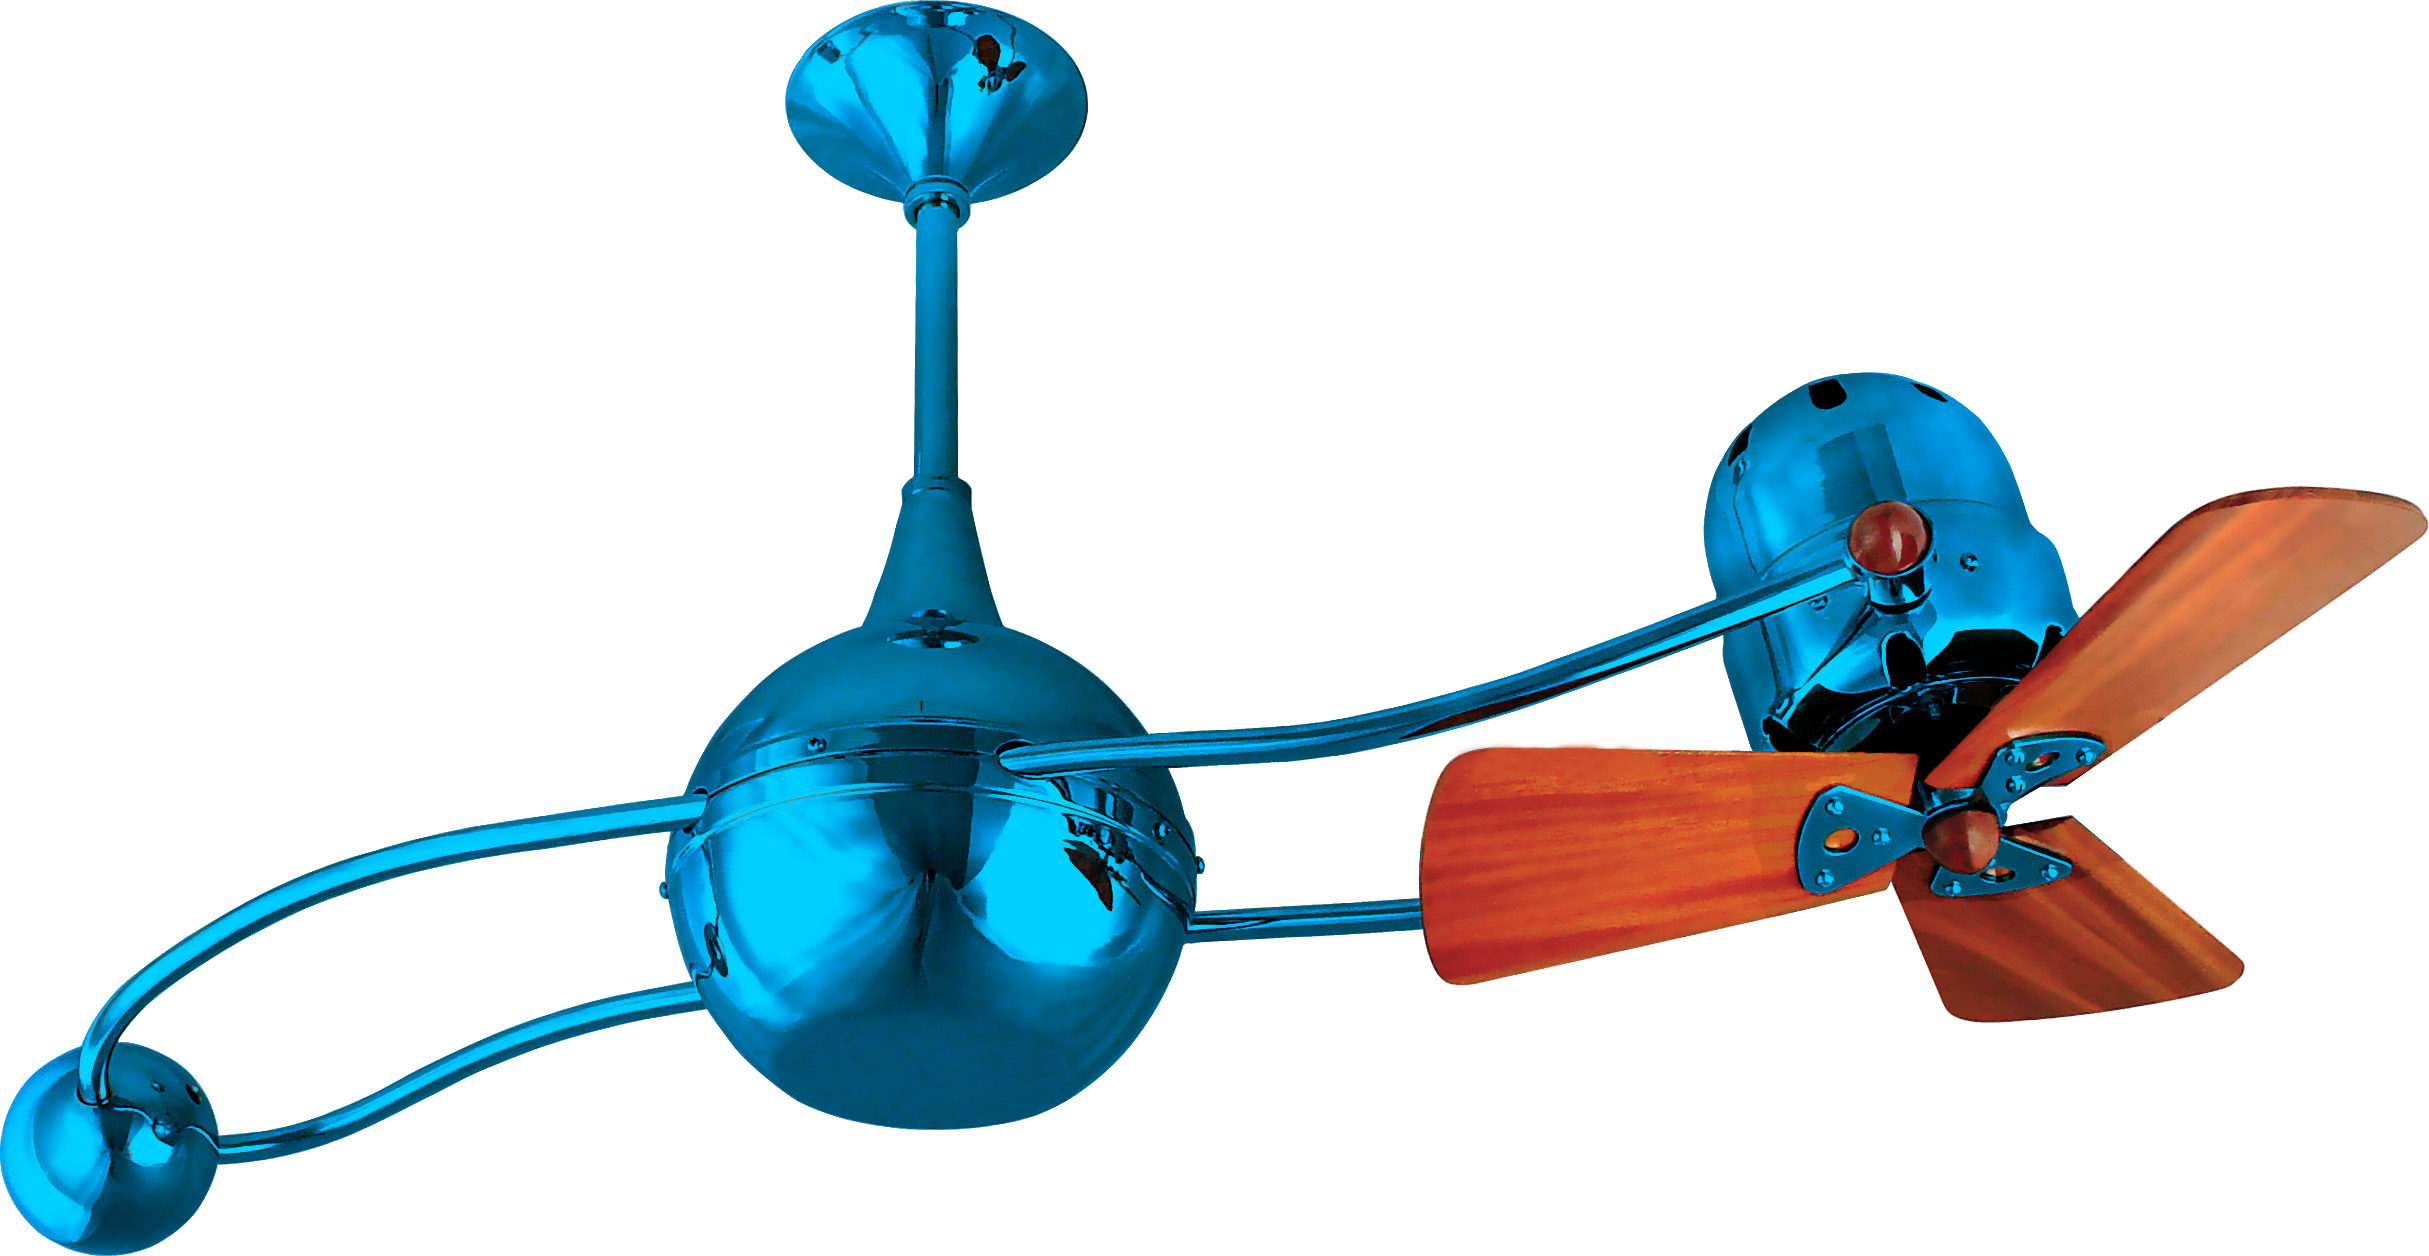 Brisa 2000 Ceiling Fan in Agua Marinha / Light Blue Finish with Mahogany Wood Blades